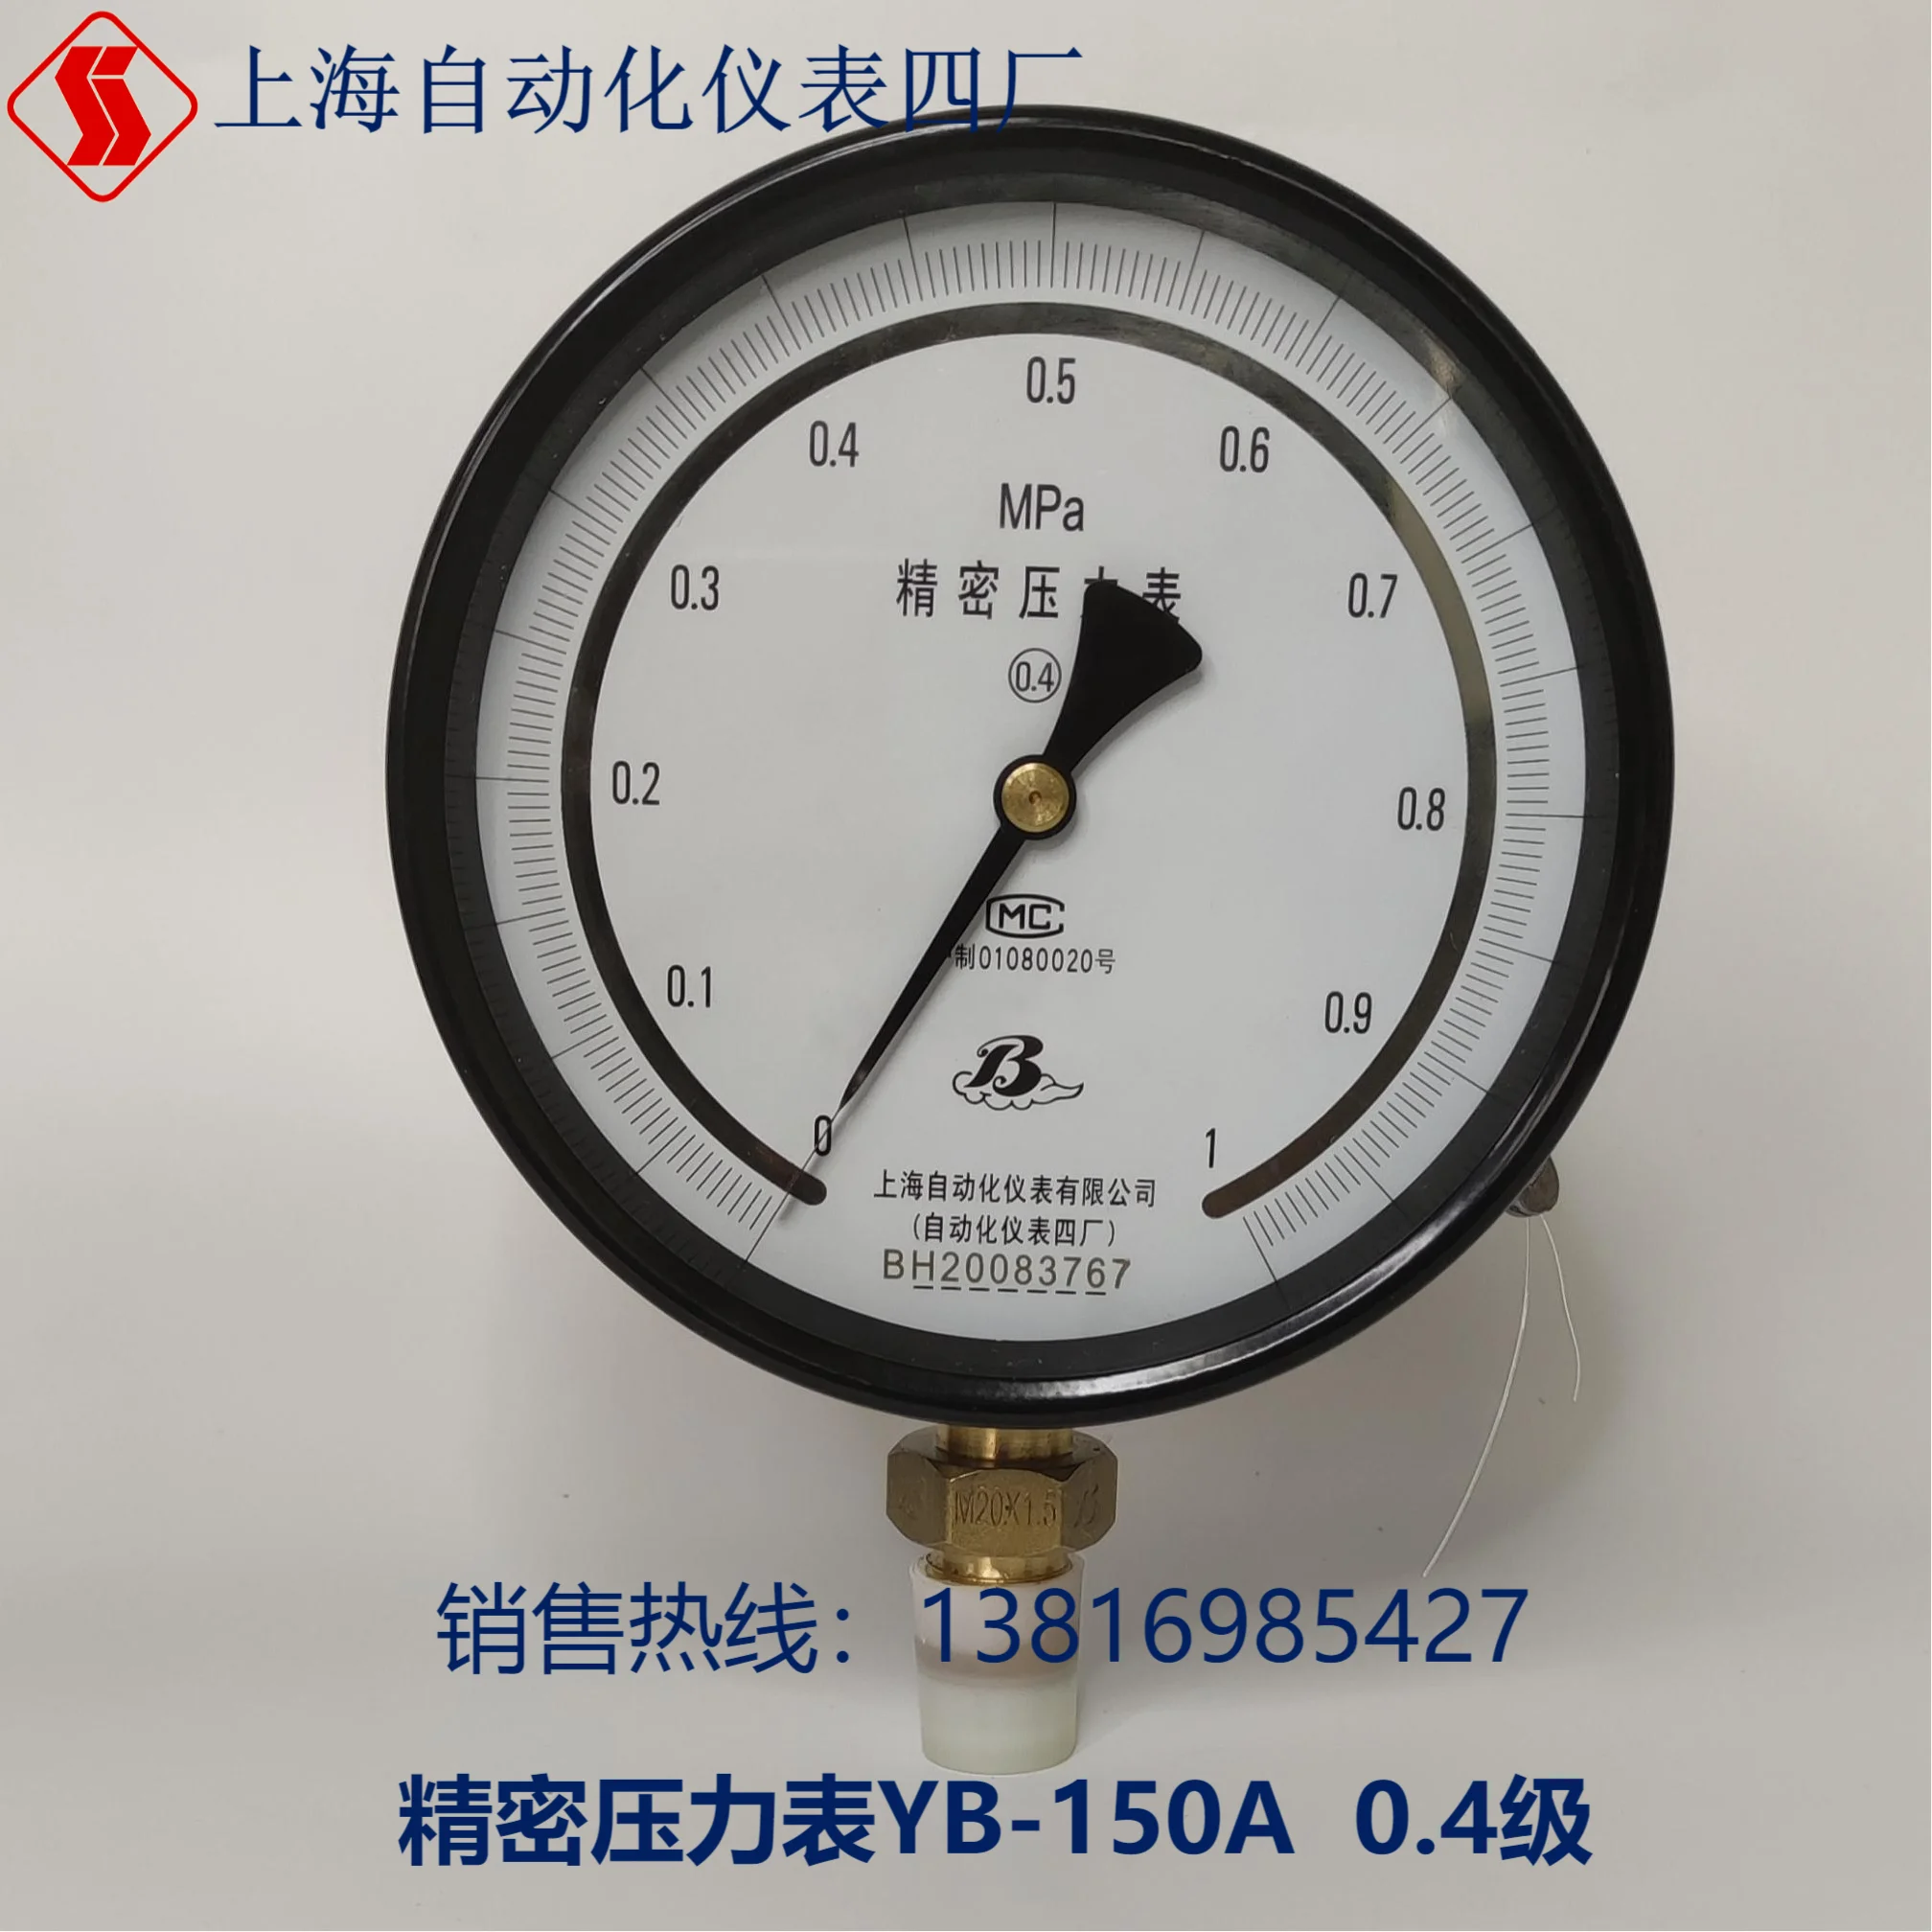 

Self-Instrument 0.4 grade precision standard pressure gauge YB-150A Shanghai Automation Instrumentation